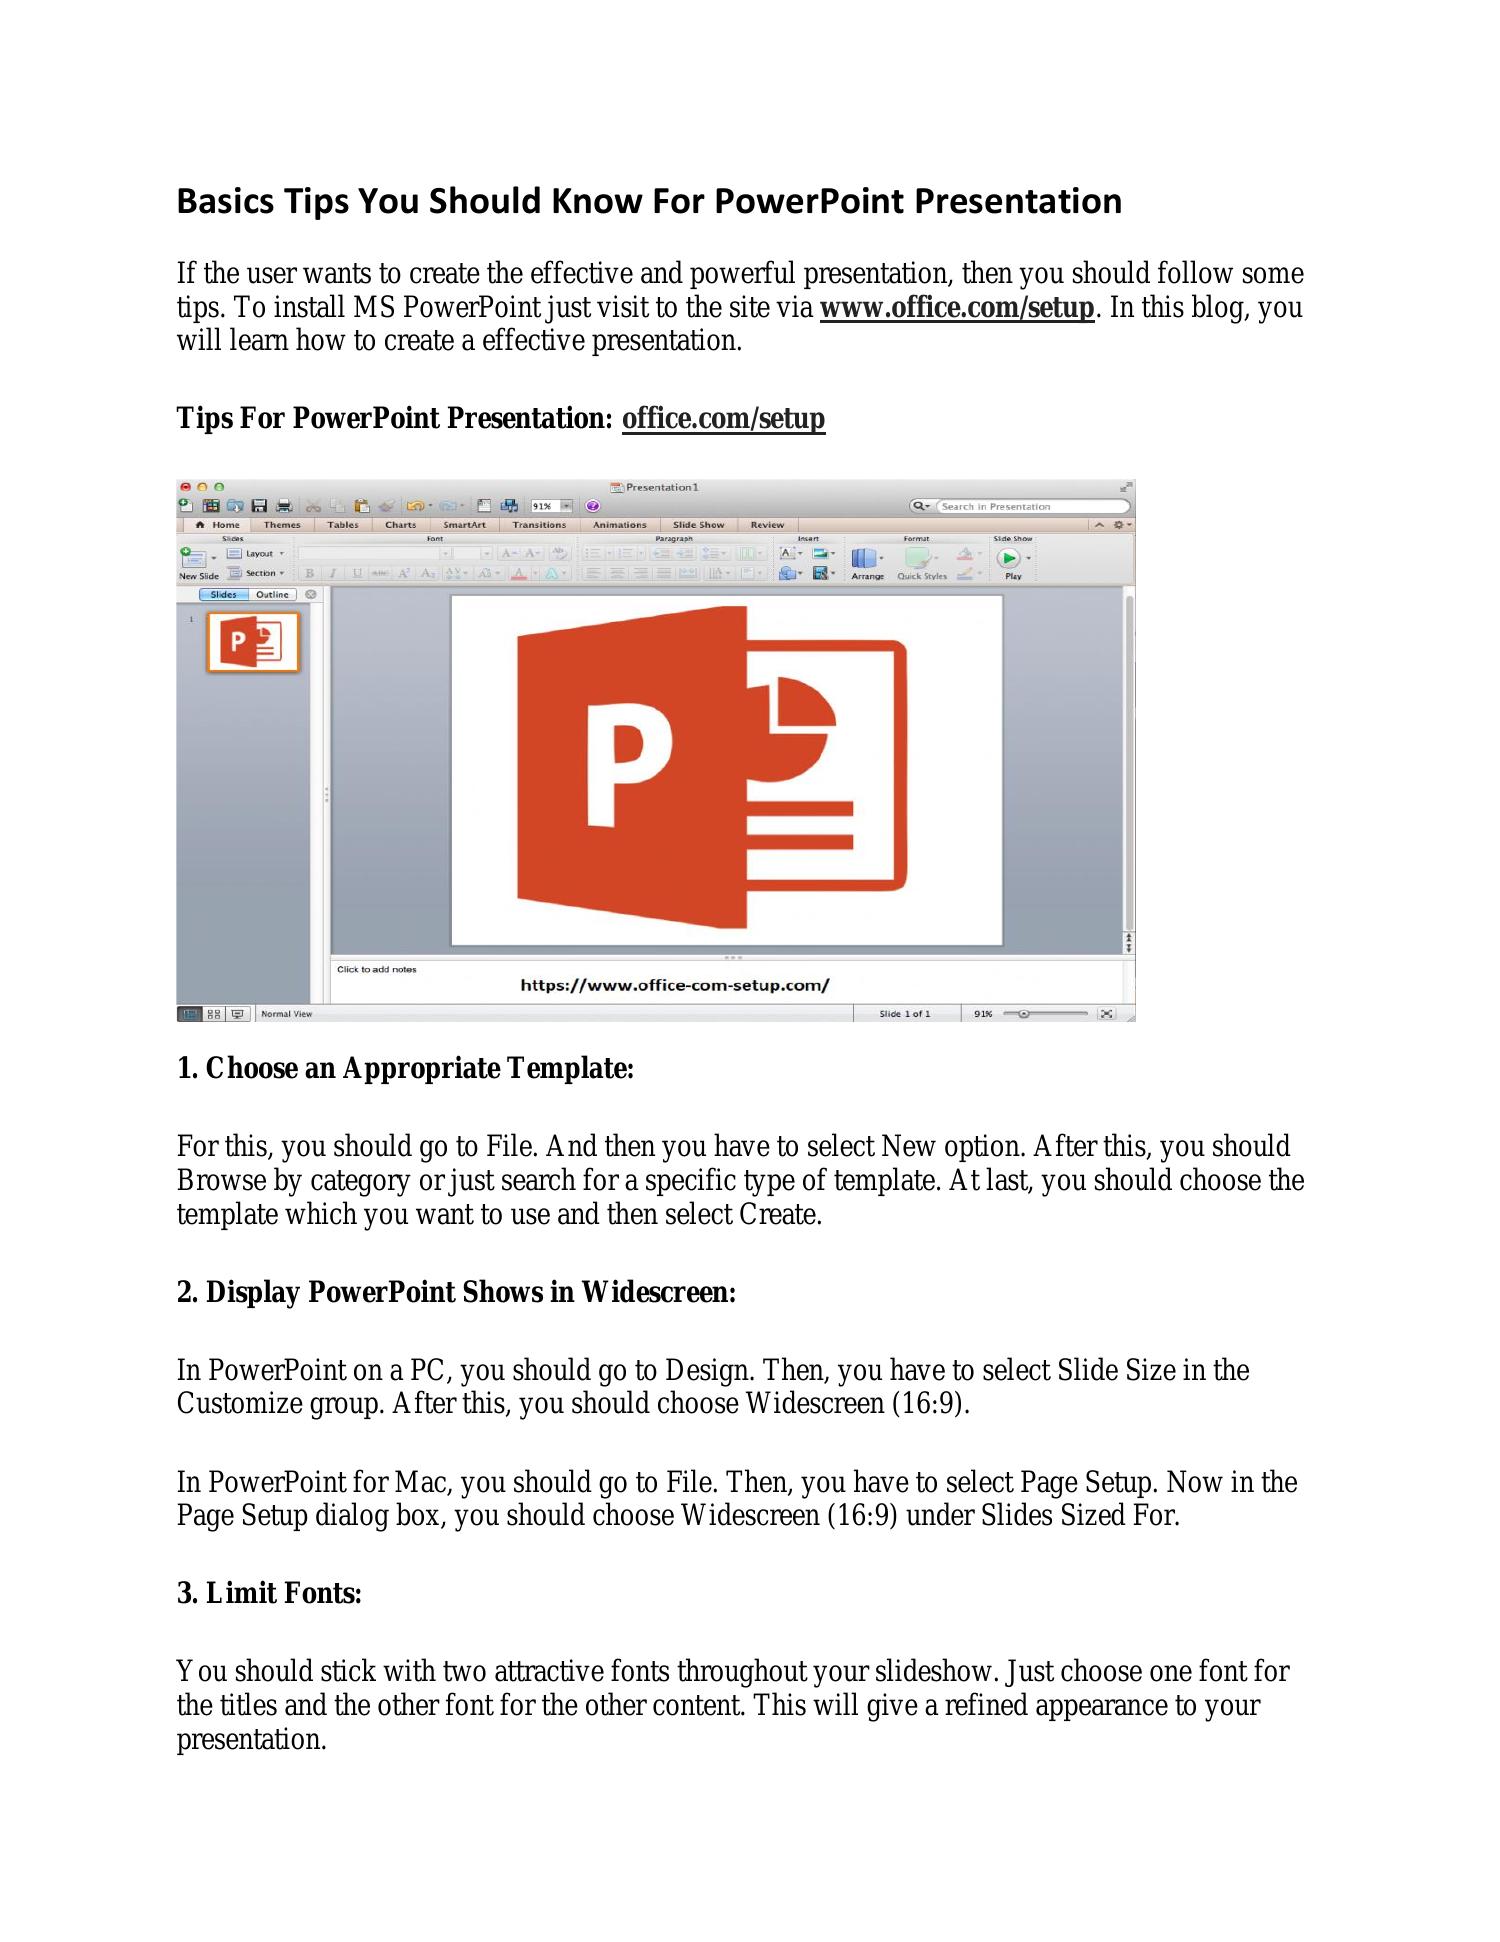 preparation of powerpoint presentation pdf